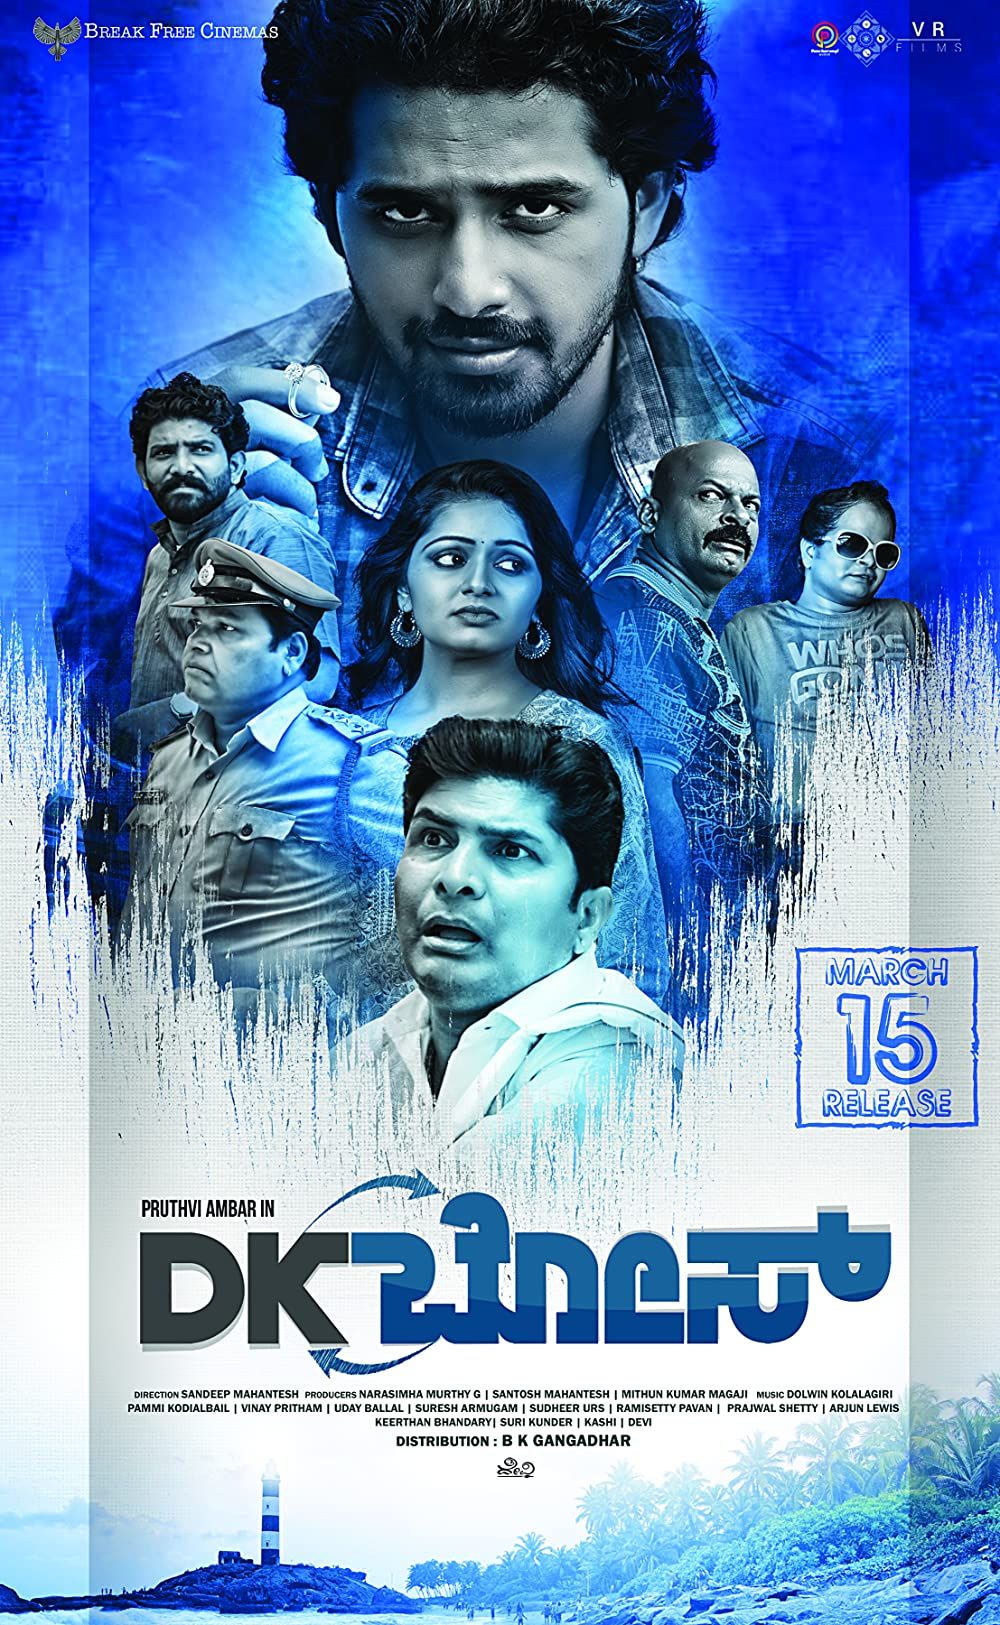 DK Bose (2022) Hindi Dubbed HDRip download full movie